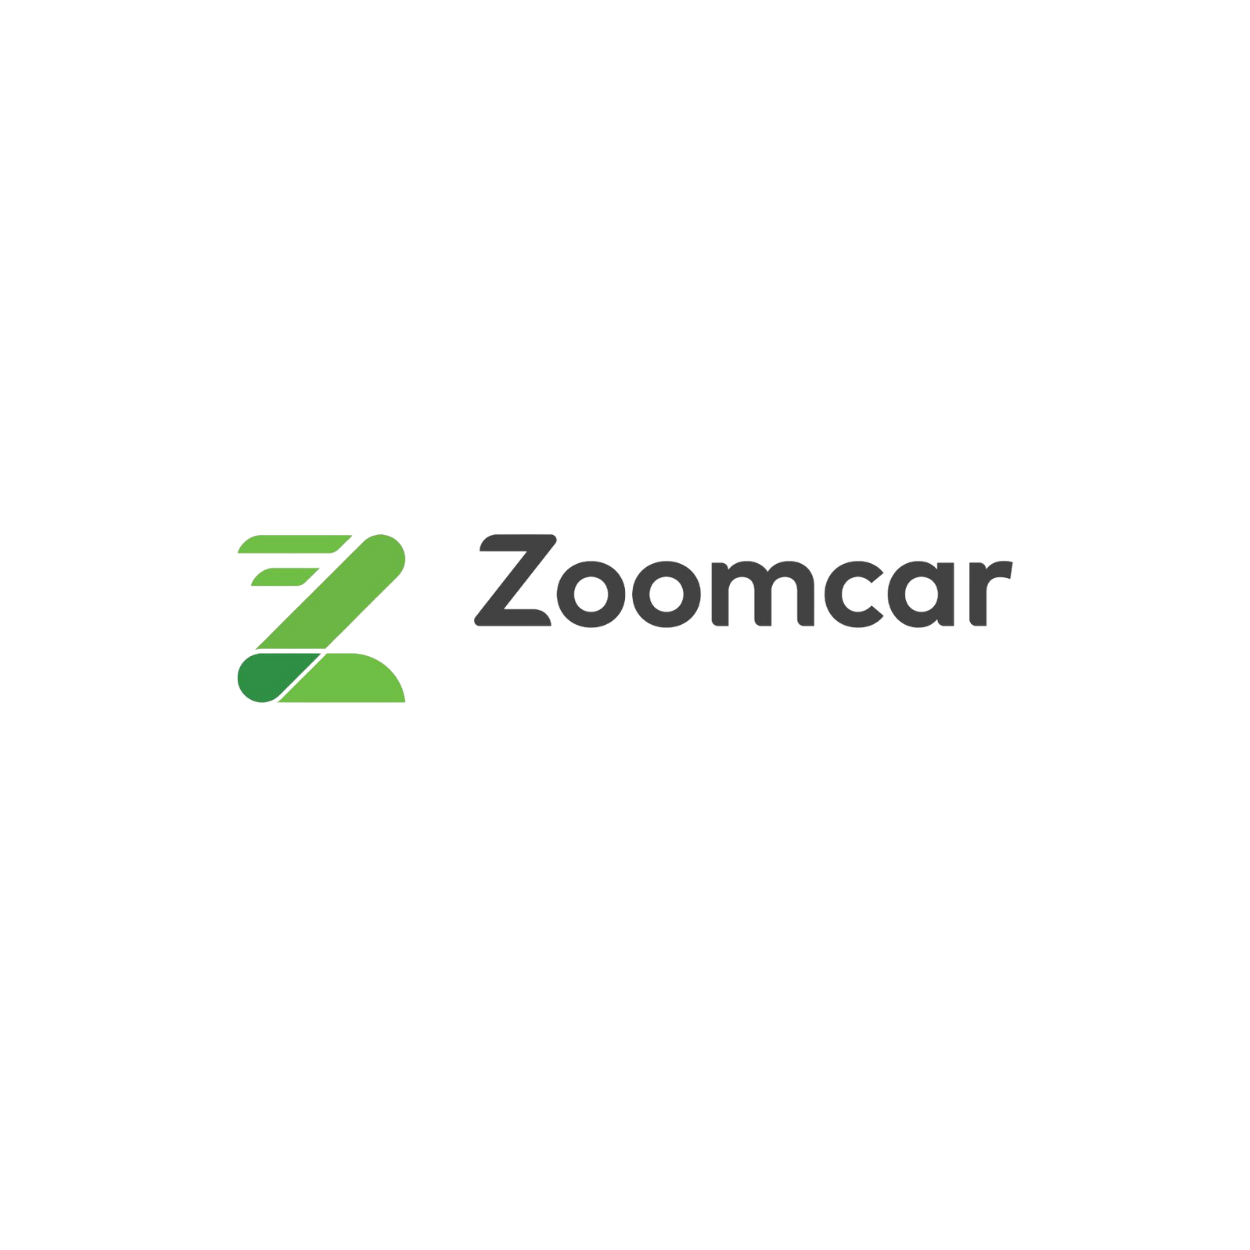 zoomcar logo